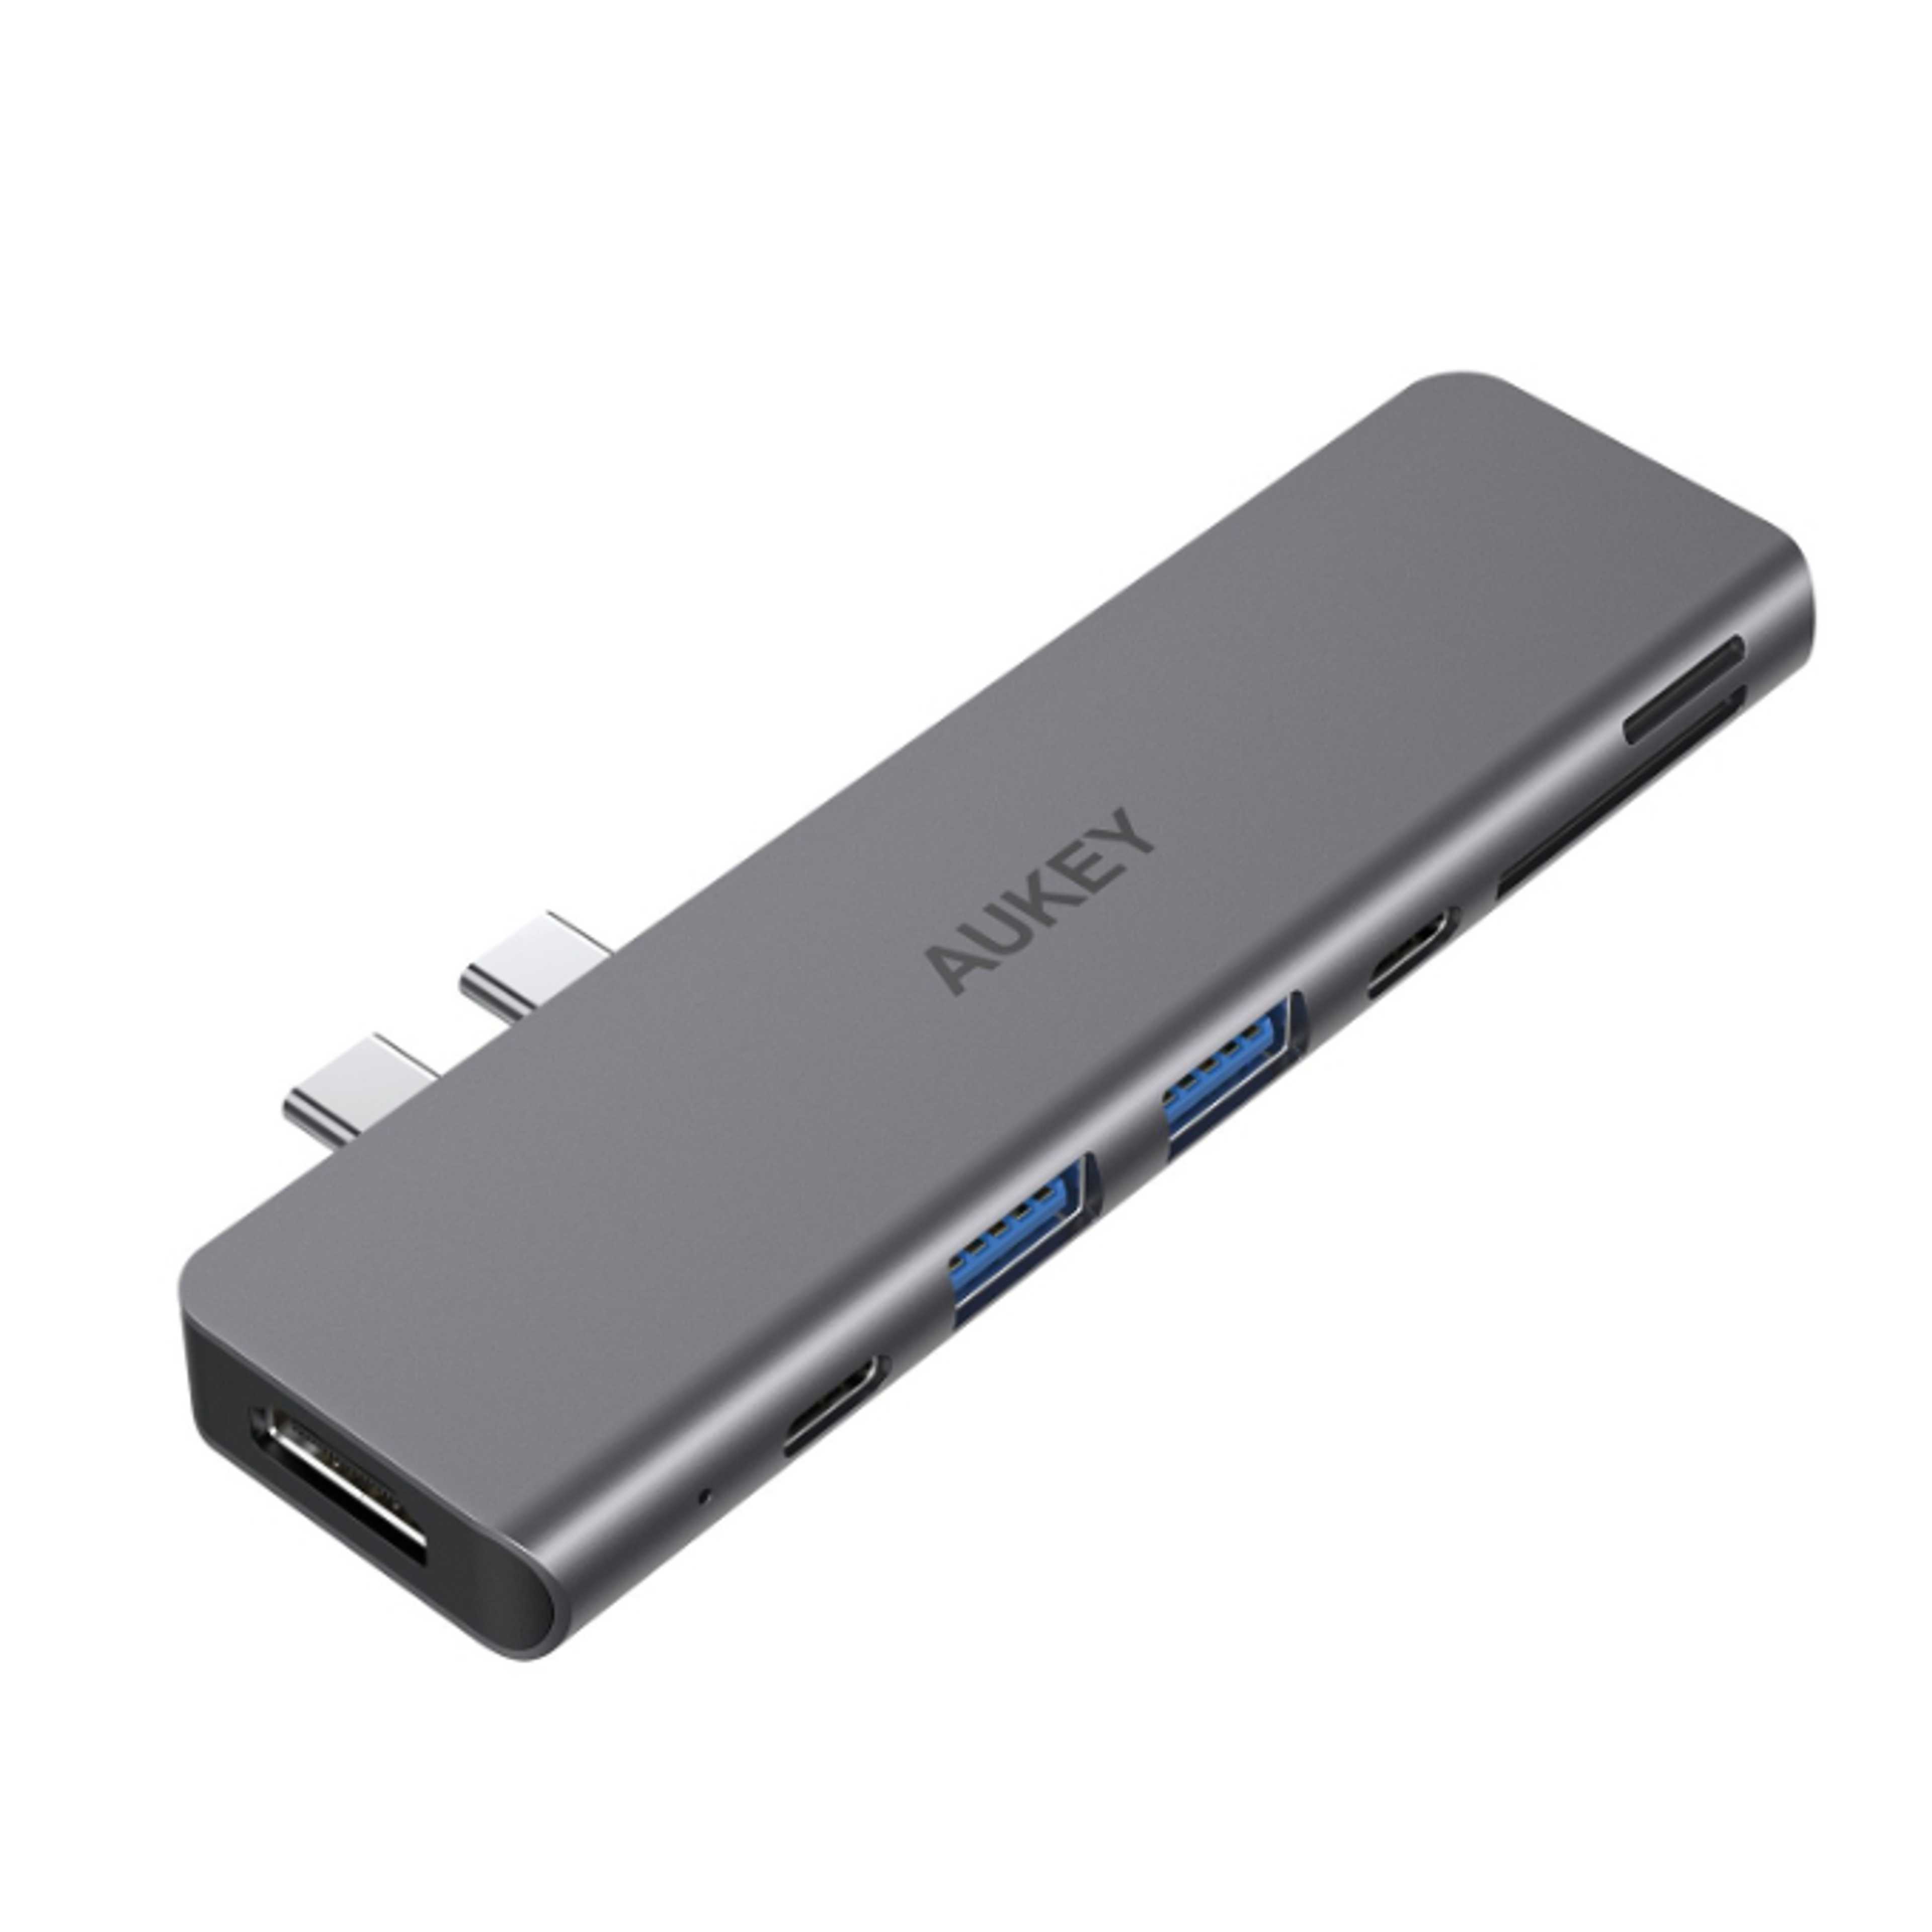 Aukey 7 in 1 USB C Hub For MacBook Pro with 4K HDMI, Thunderbolt 3, 2 USB 3.0, USB-C Data Port (CB-C76)